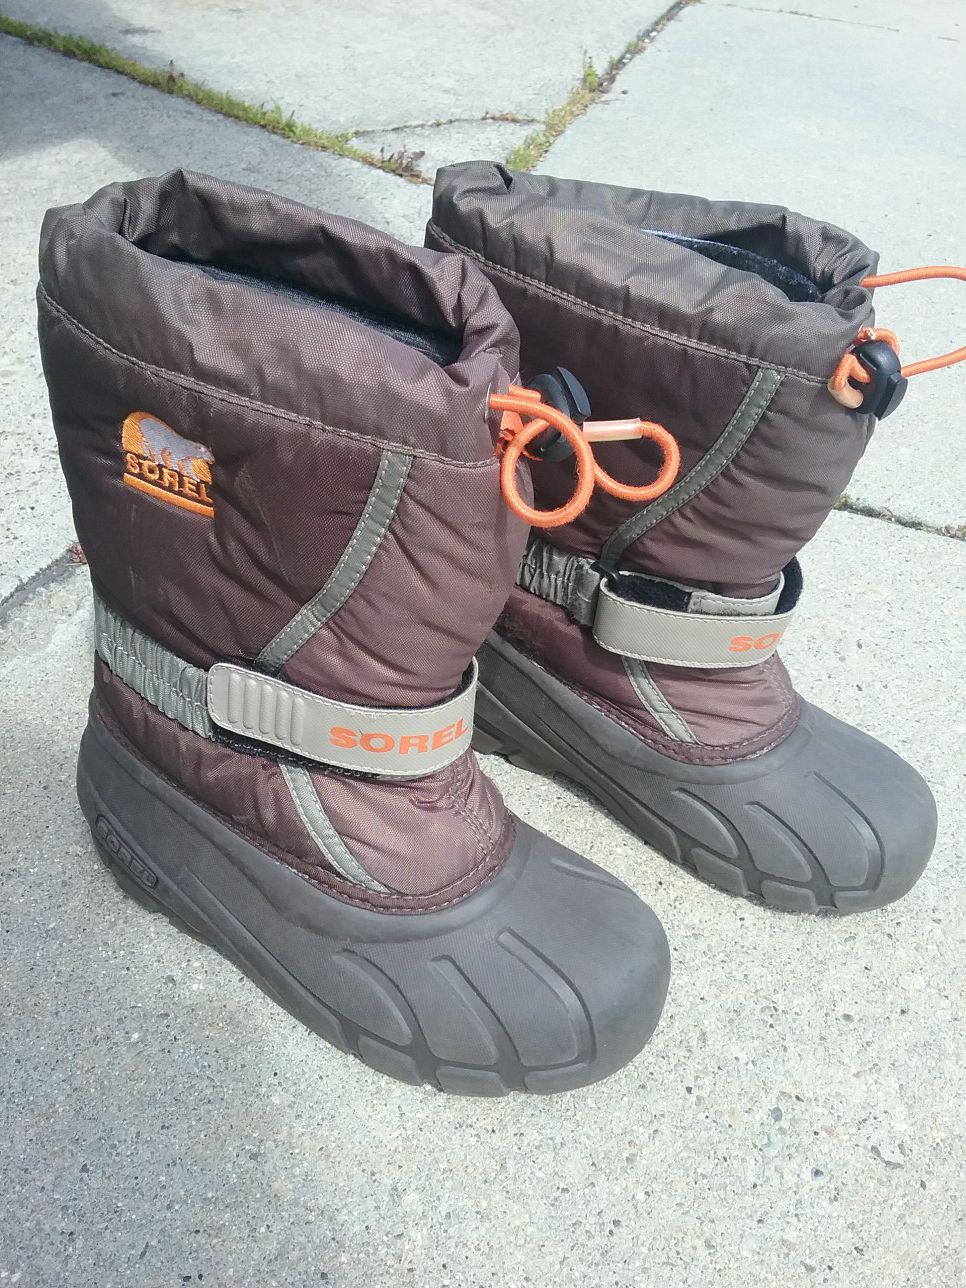 Snow boots, kids 1, Sorel, nice!